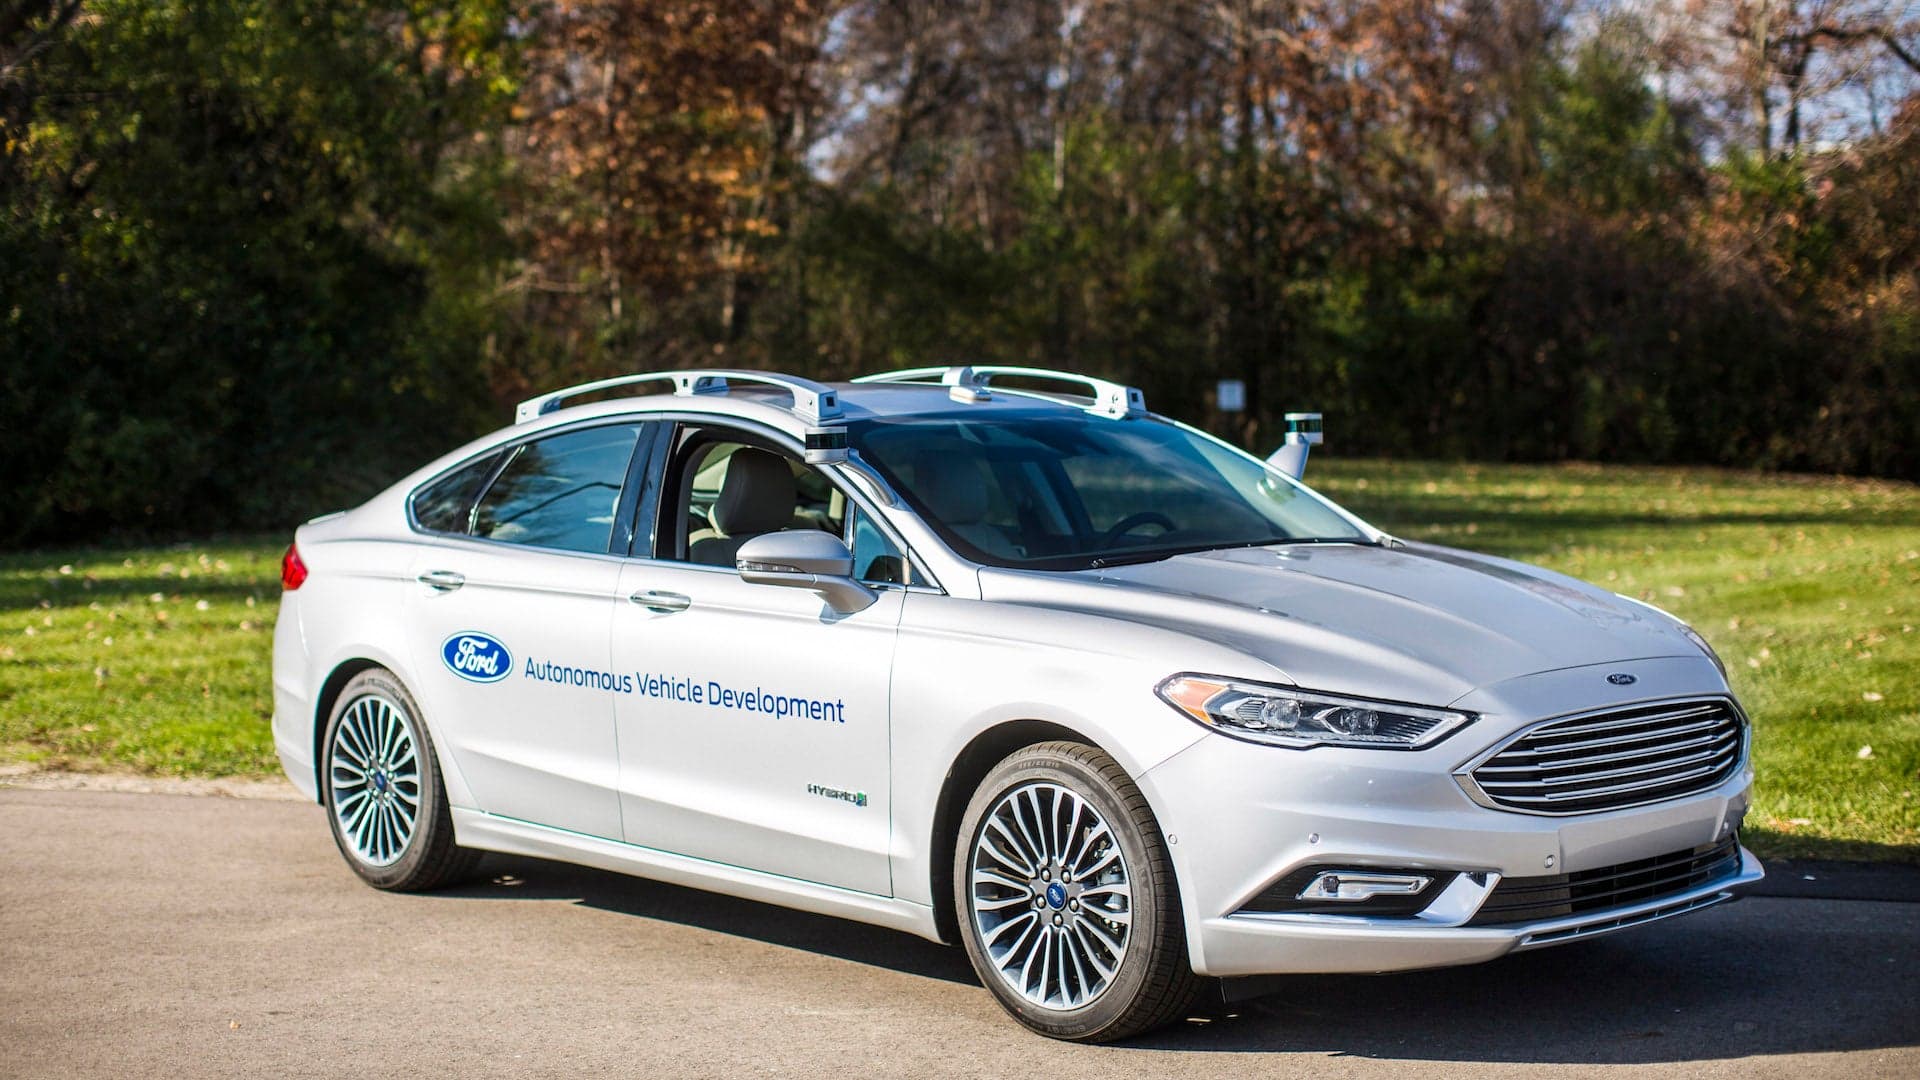 Ford’s Autonomous Hybrid Prototype Debuts at CES Next Week